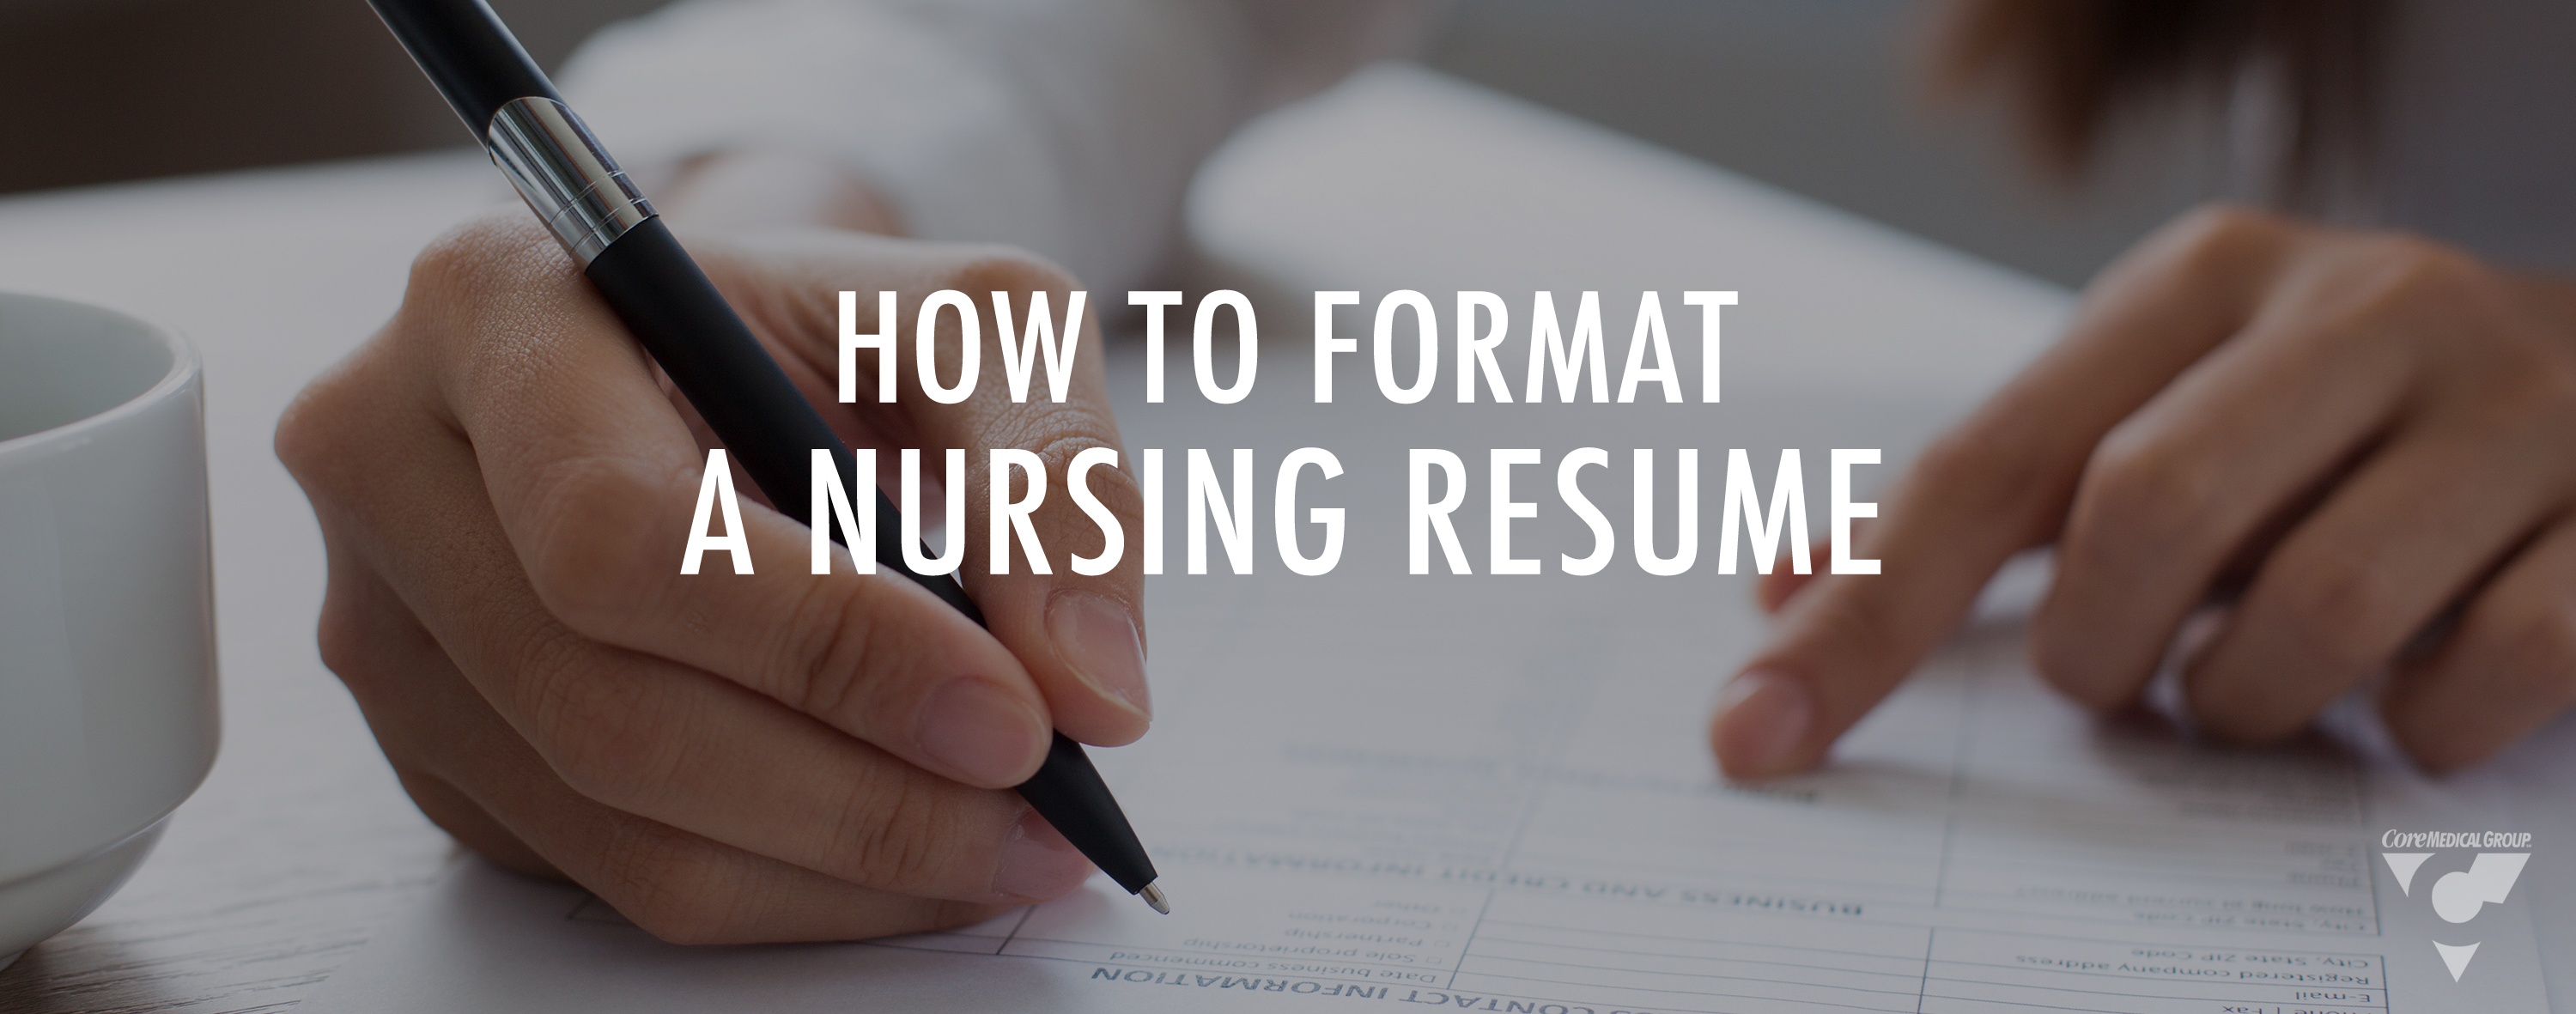 CMG_Blog_FeaturedImages_04.18_How_to_Format_a_Nursing_Resume_Blog_R1